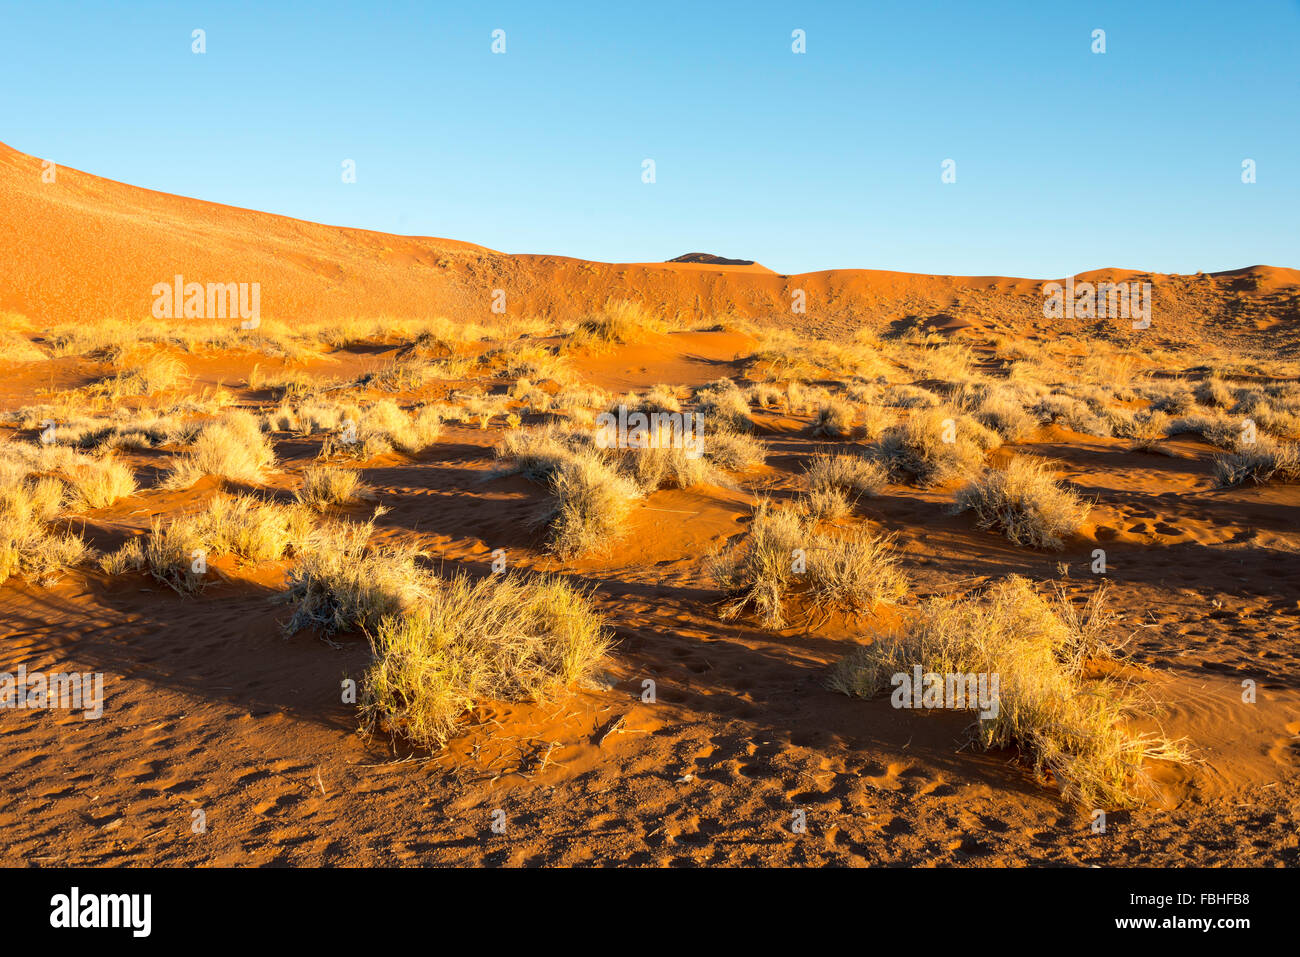 La scena del deserto, Namib Naukluft Park, Namib Desert, Repubblica di Namibia Foto Stock